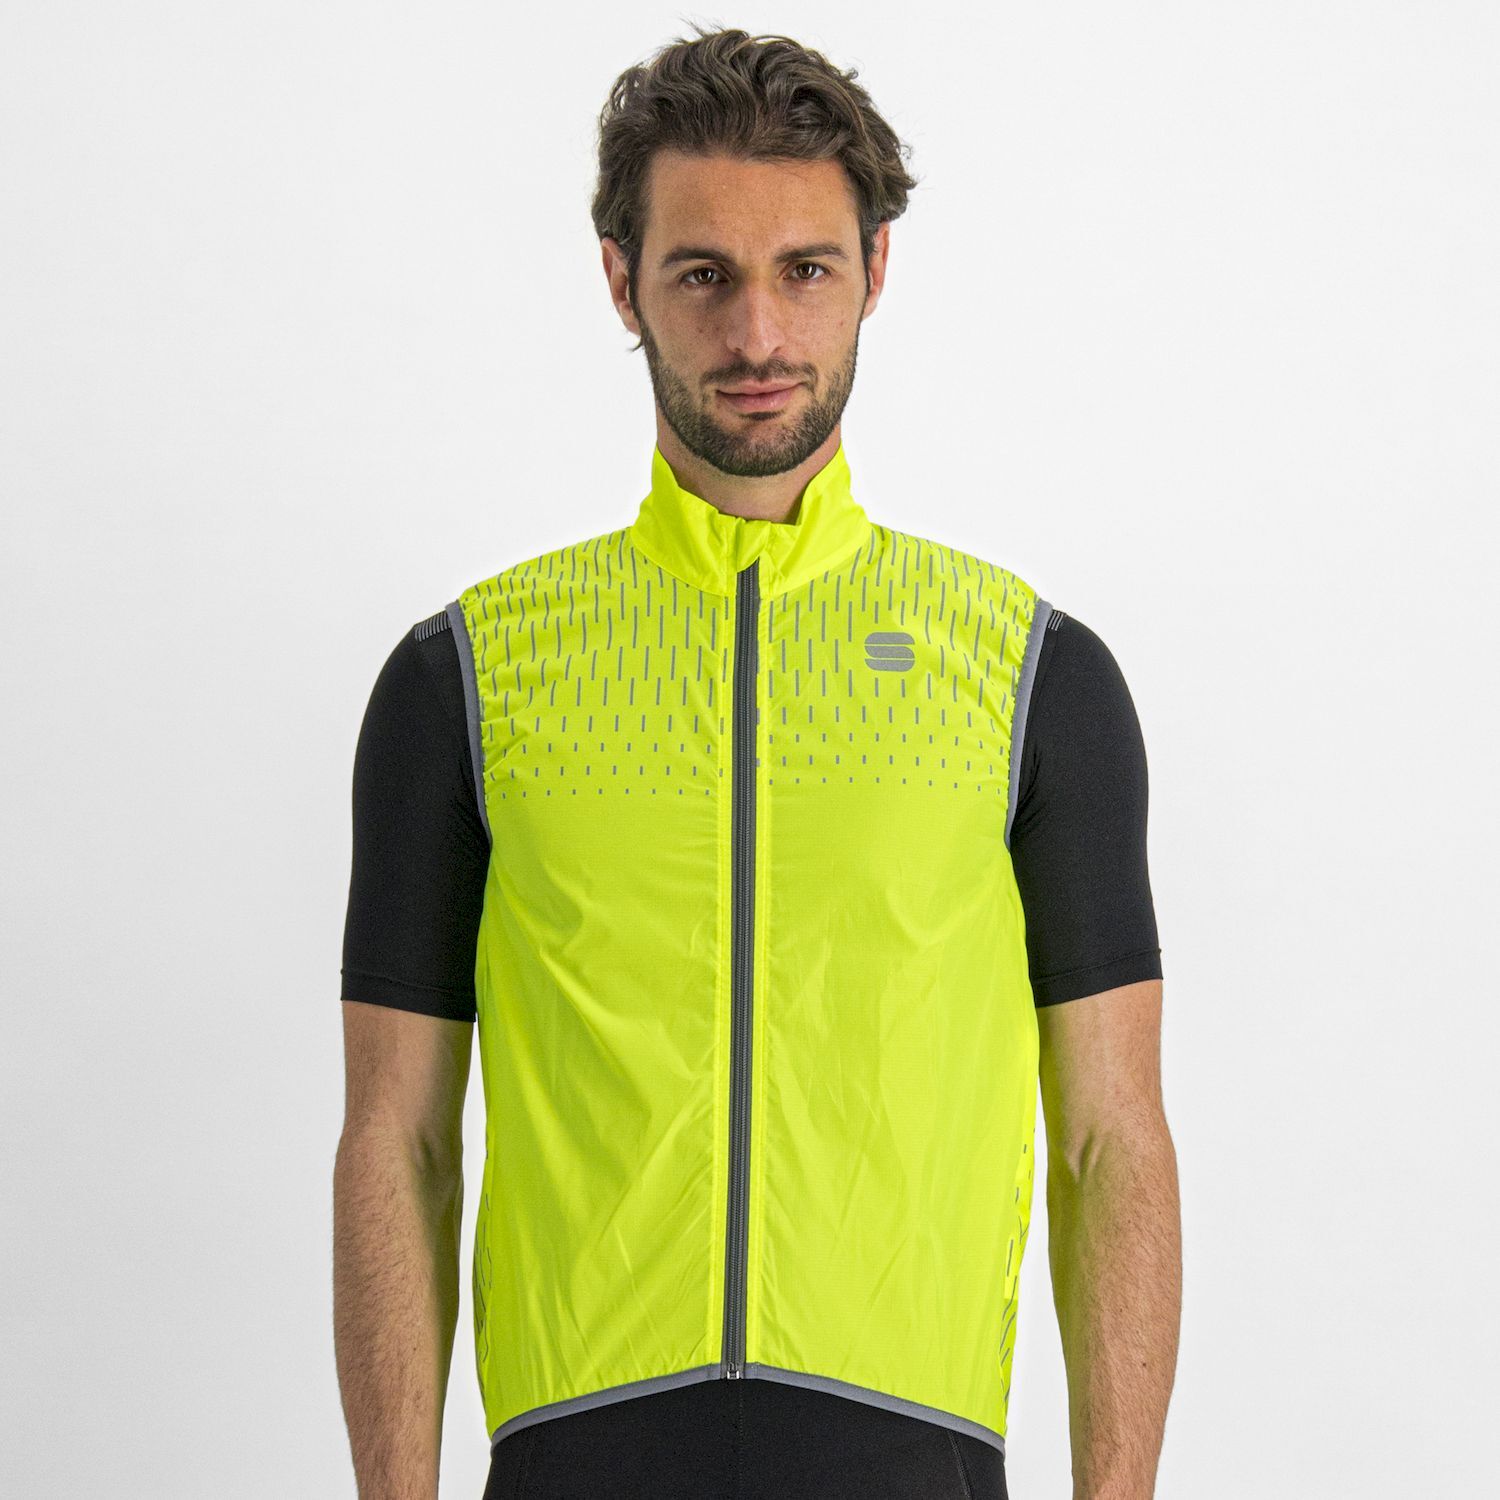 Sportful Reflex - Cycling vest - Men's